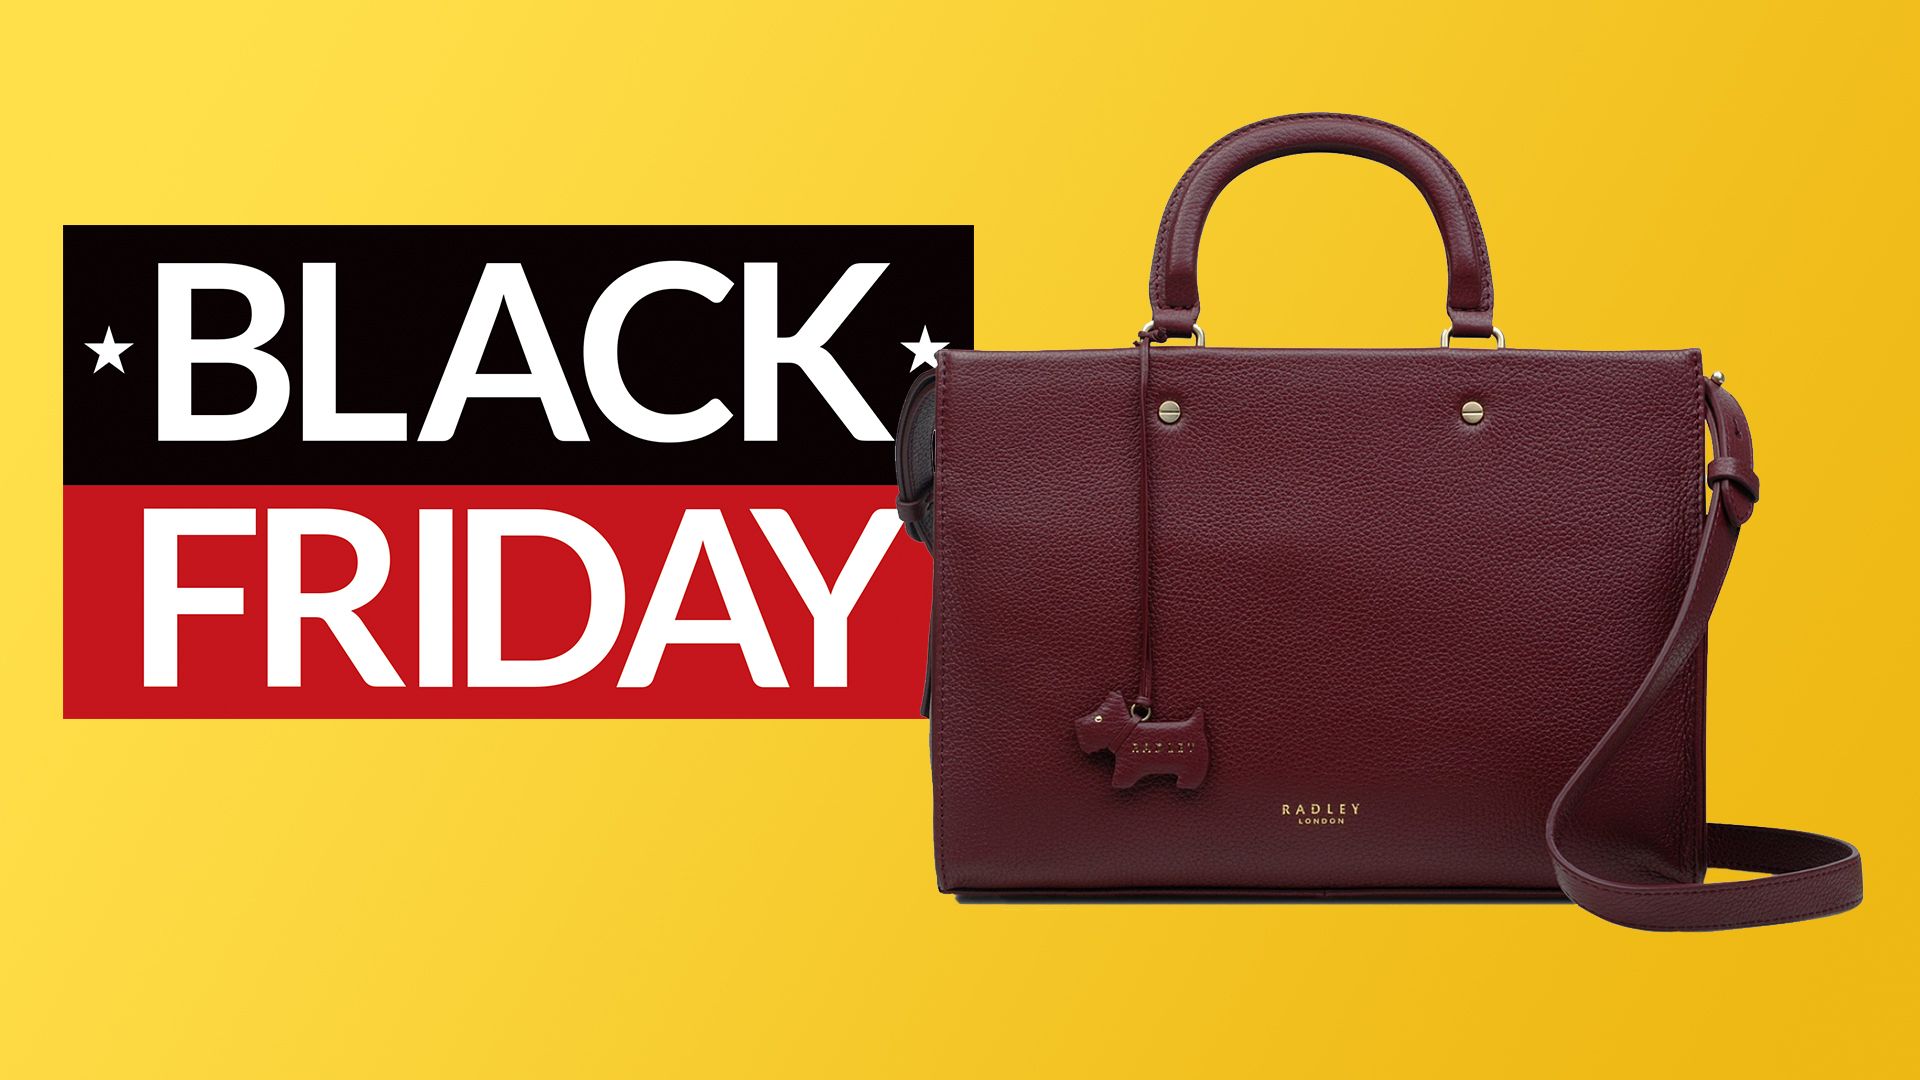 Black Friday handbags deal save up to 50 at Radley T3